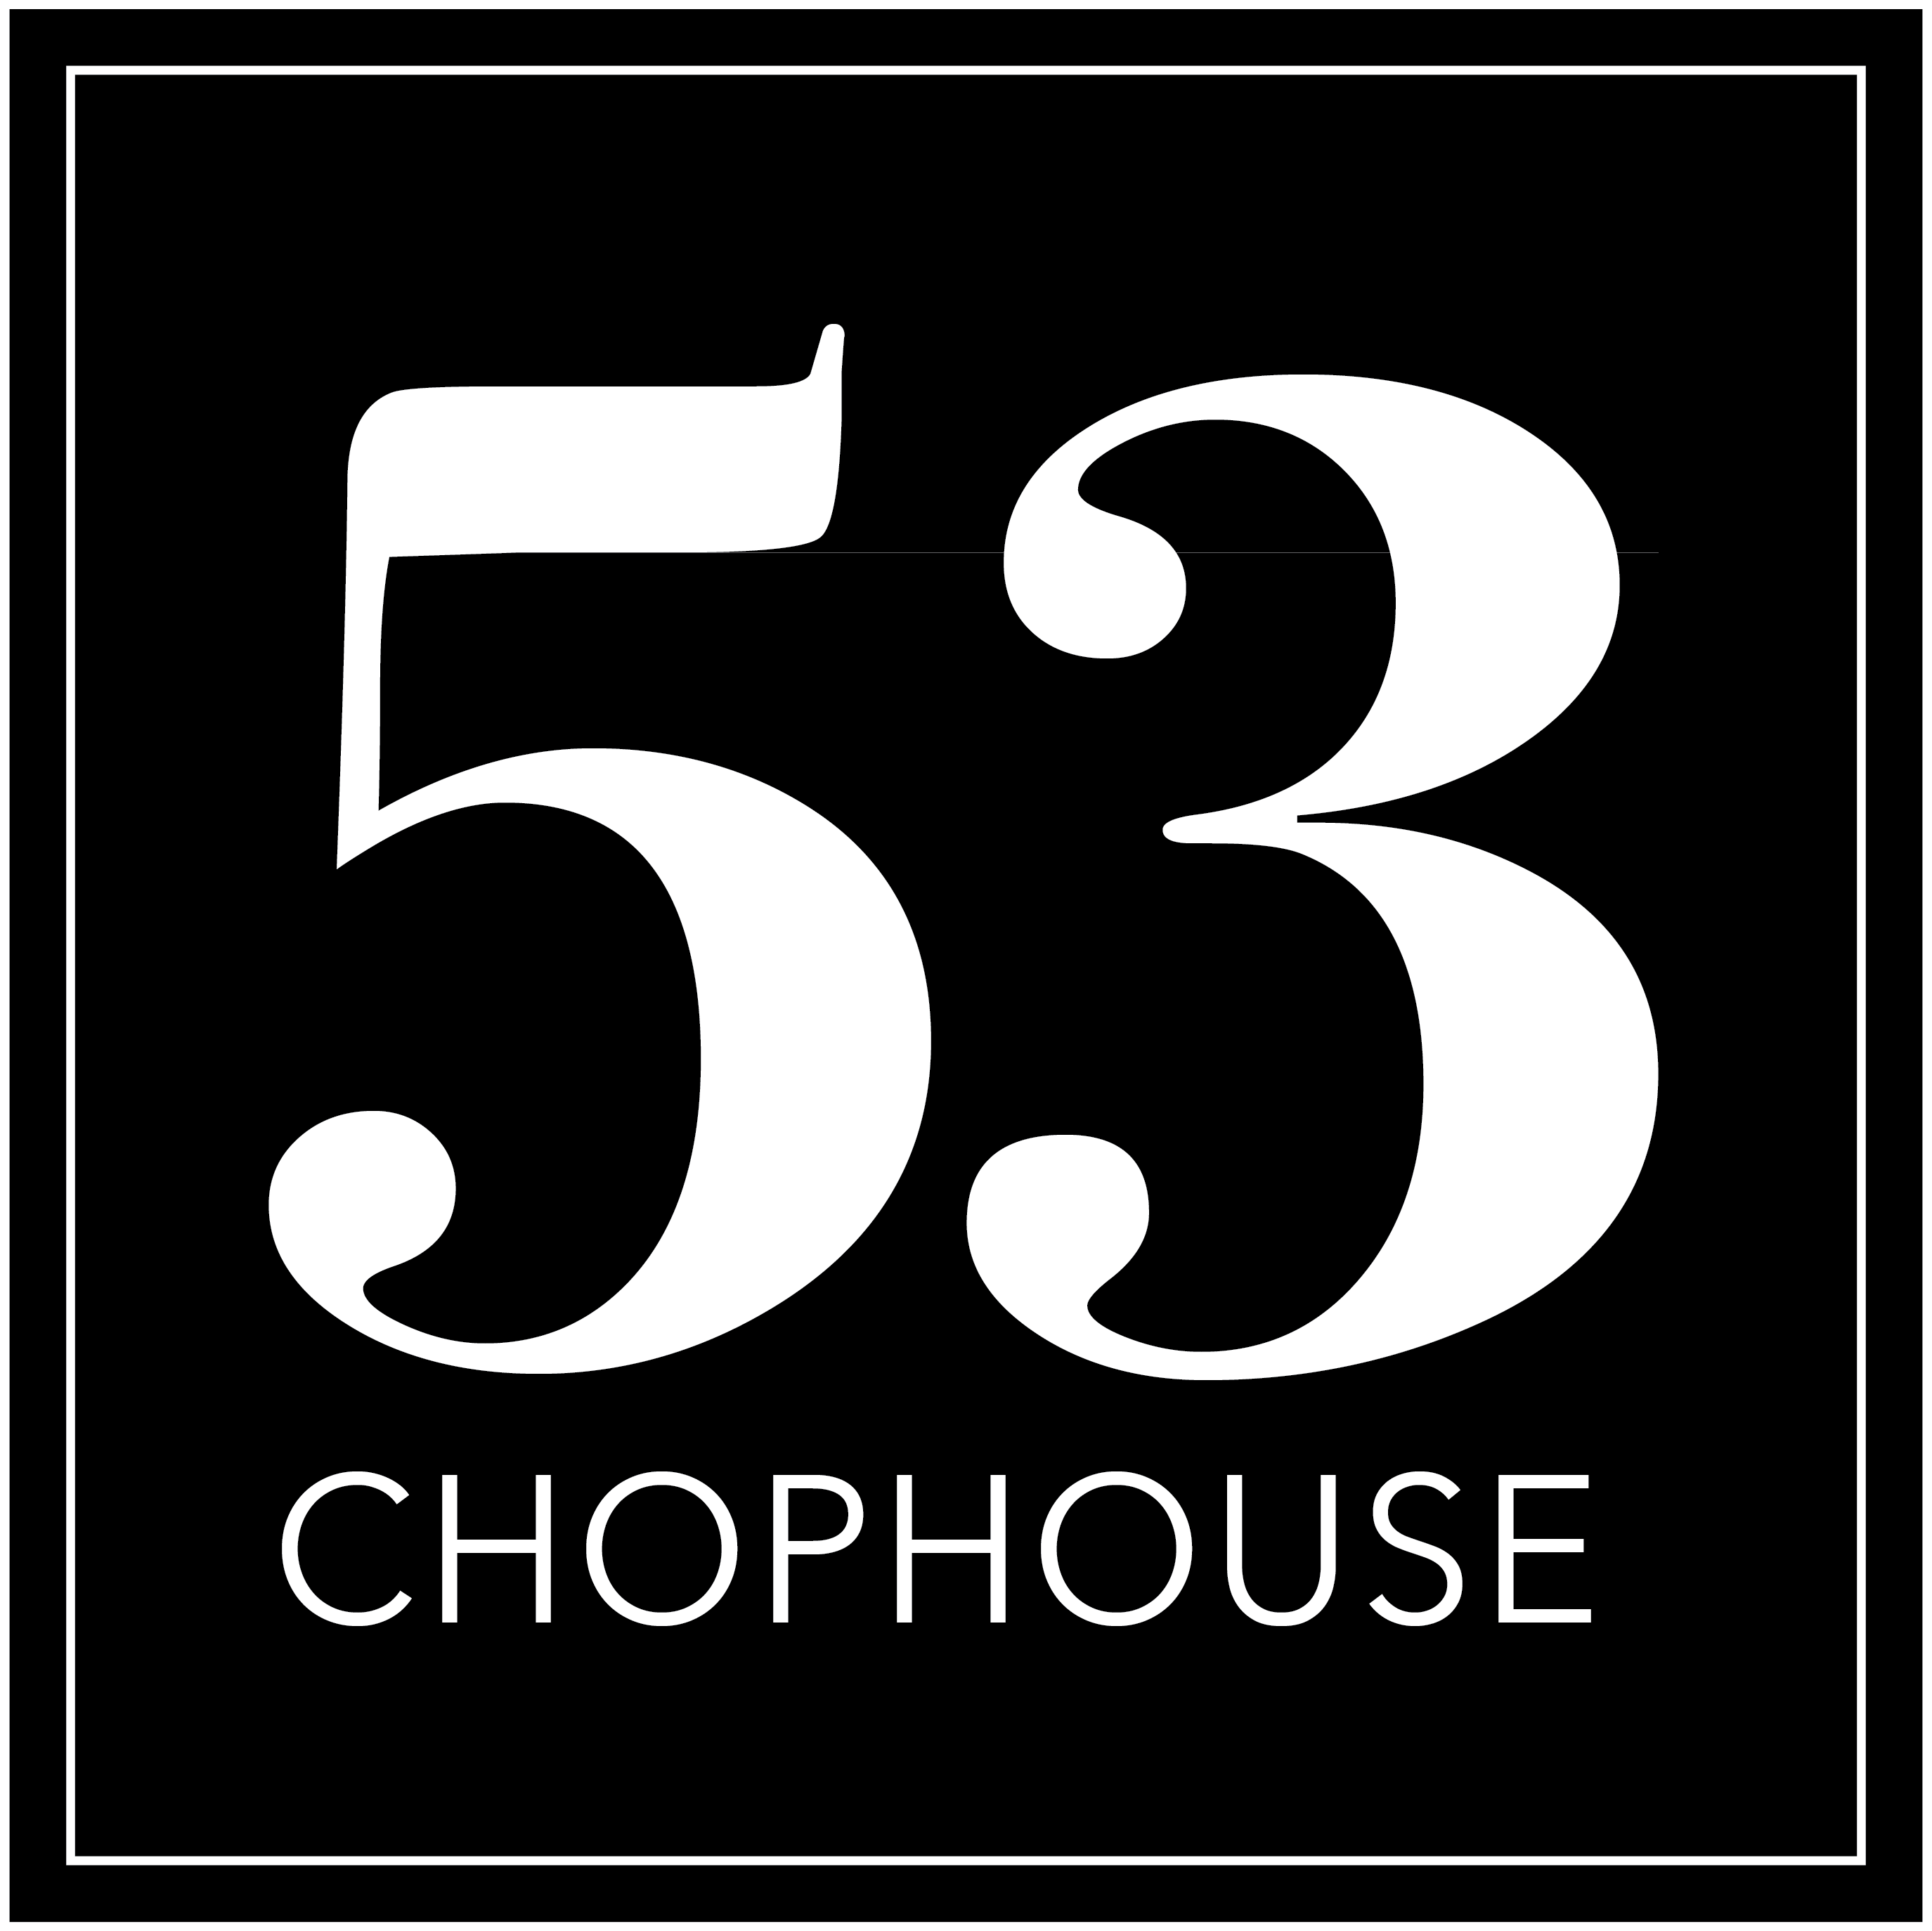 53 Chophouse 